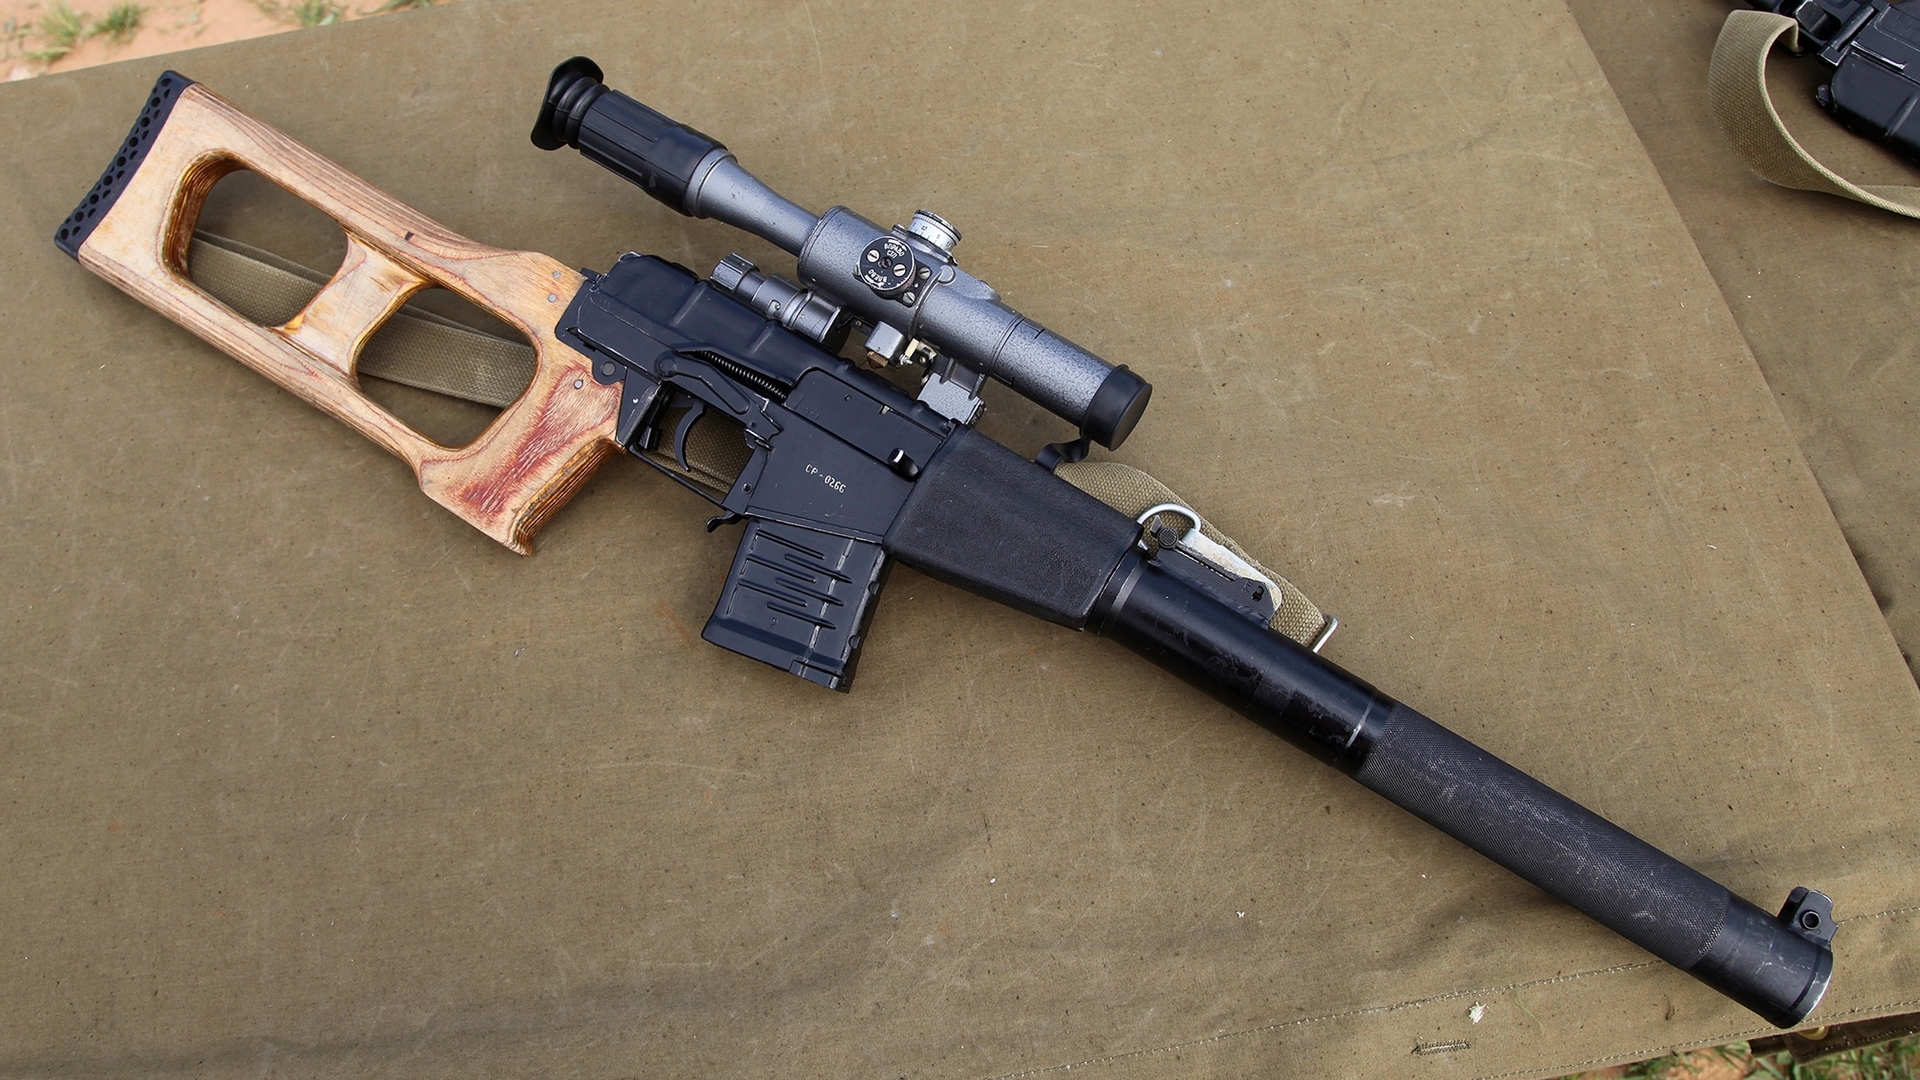 Image: Rifle, sight, silencer, weapons, VSS, Screw cutter, Vitaly V. Kuzmin